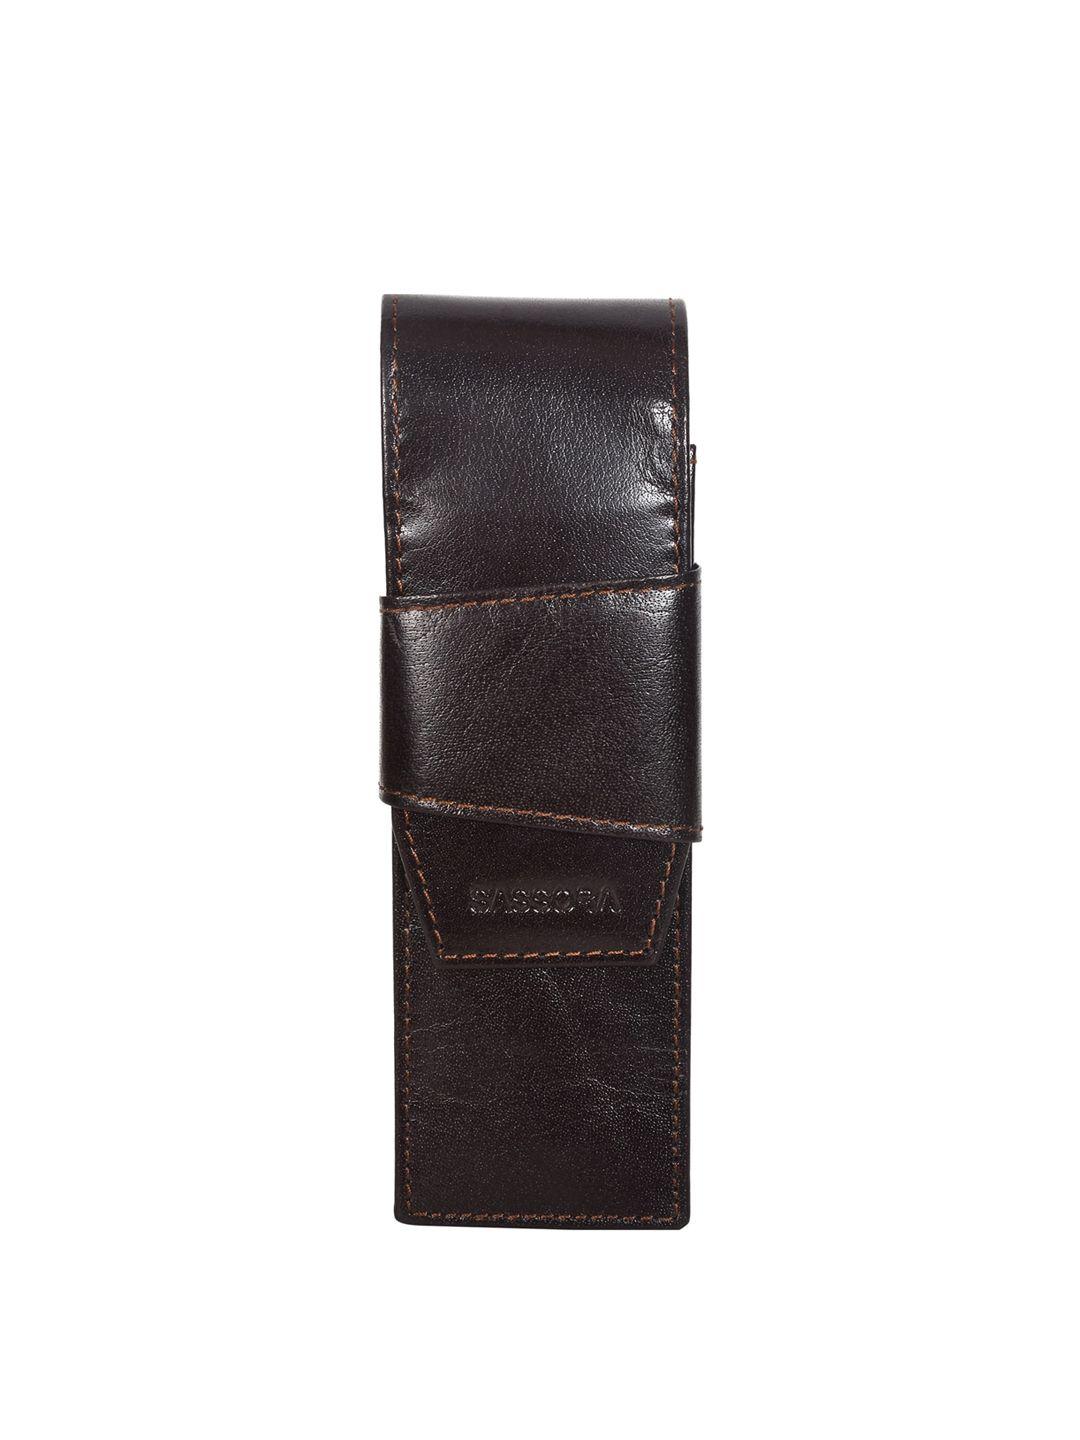 sassora brown leather pencase